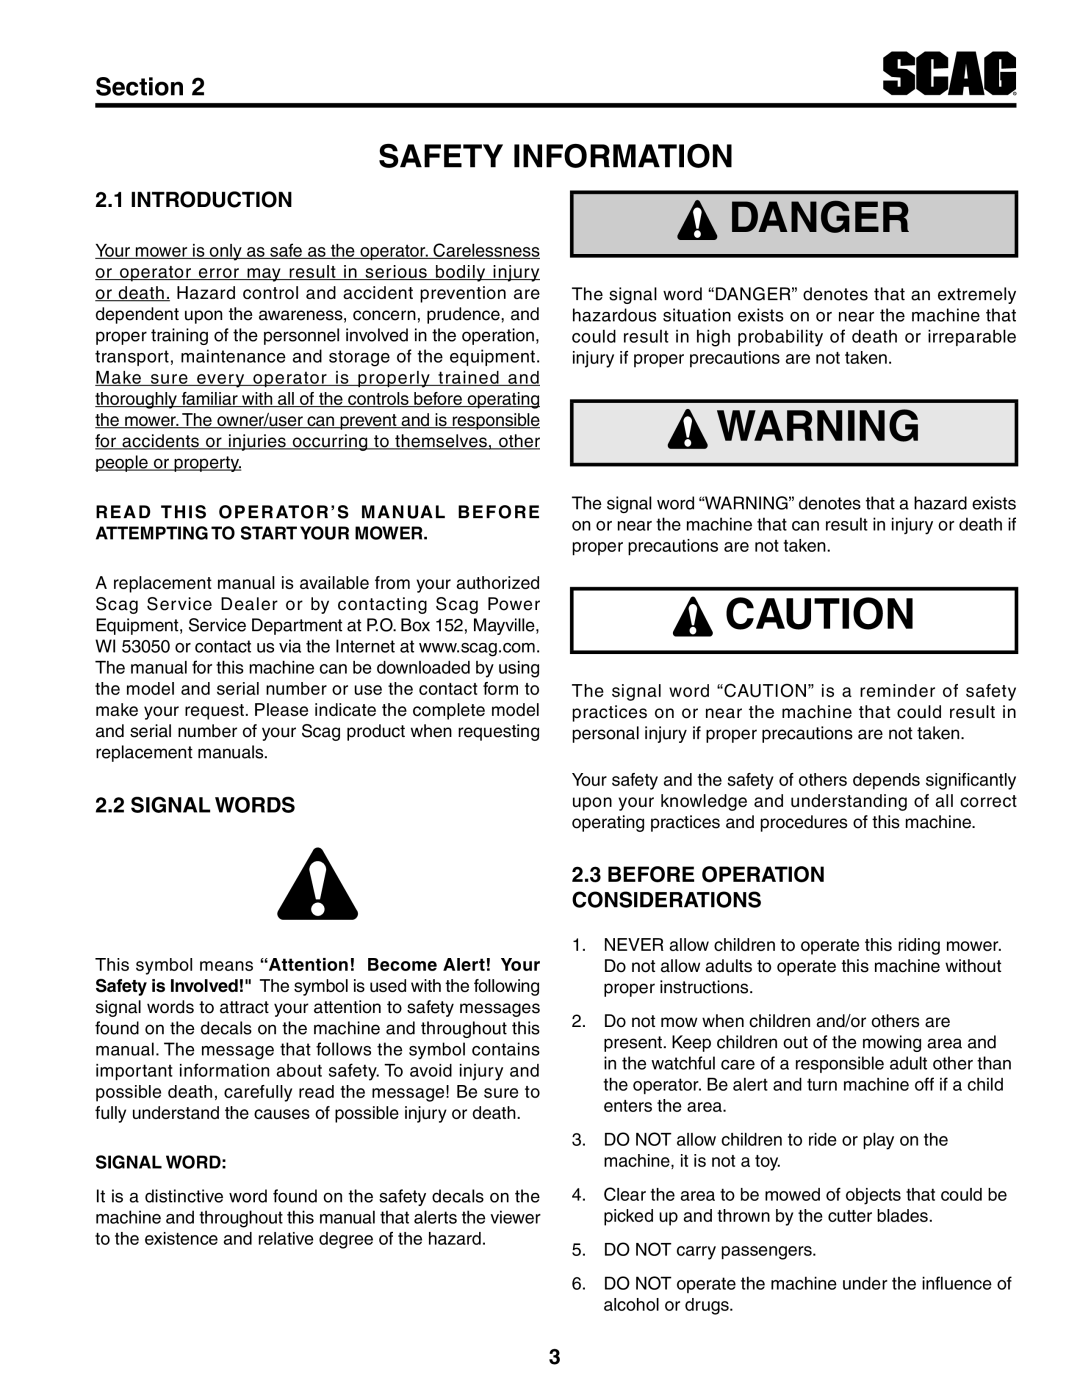 Scag Power Equipment STWC52V-26KA-LC, STWC52V-25KA manual Danger, Safety Information, Section, Introduction, Signal Words 